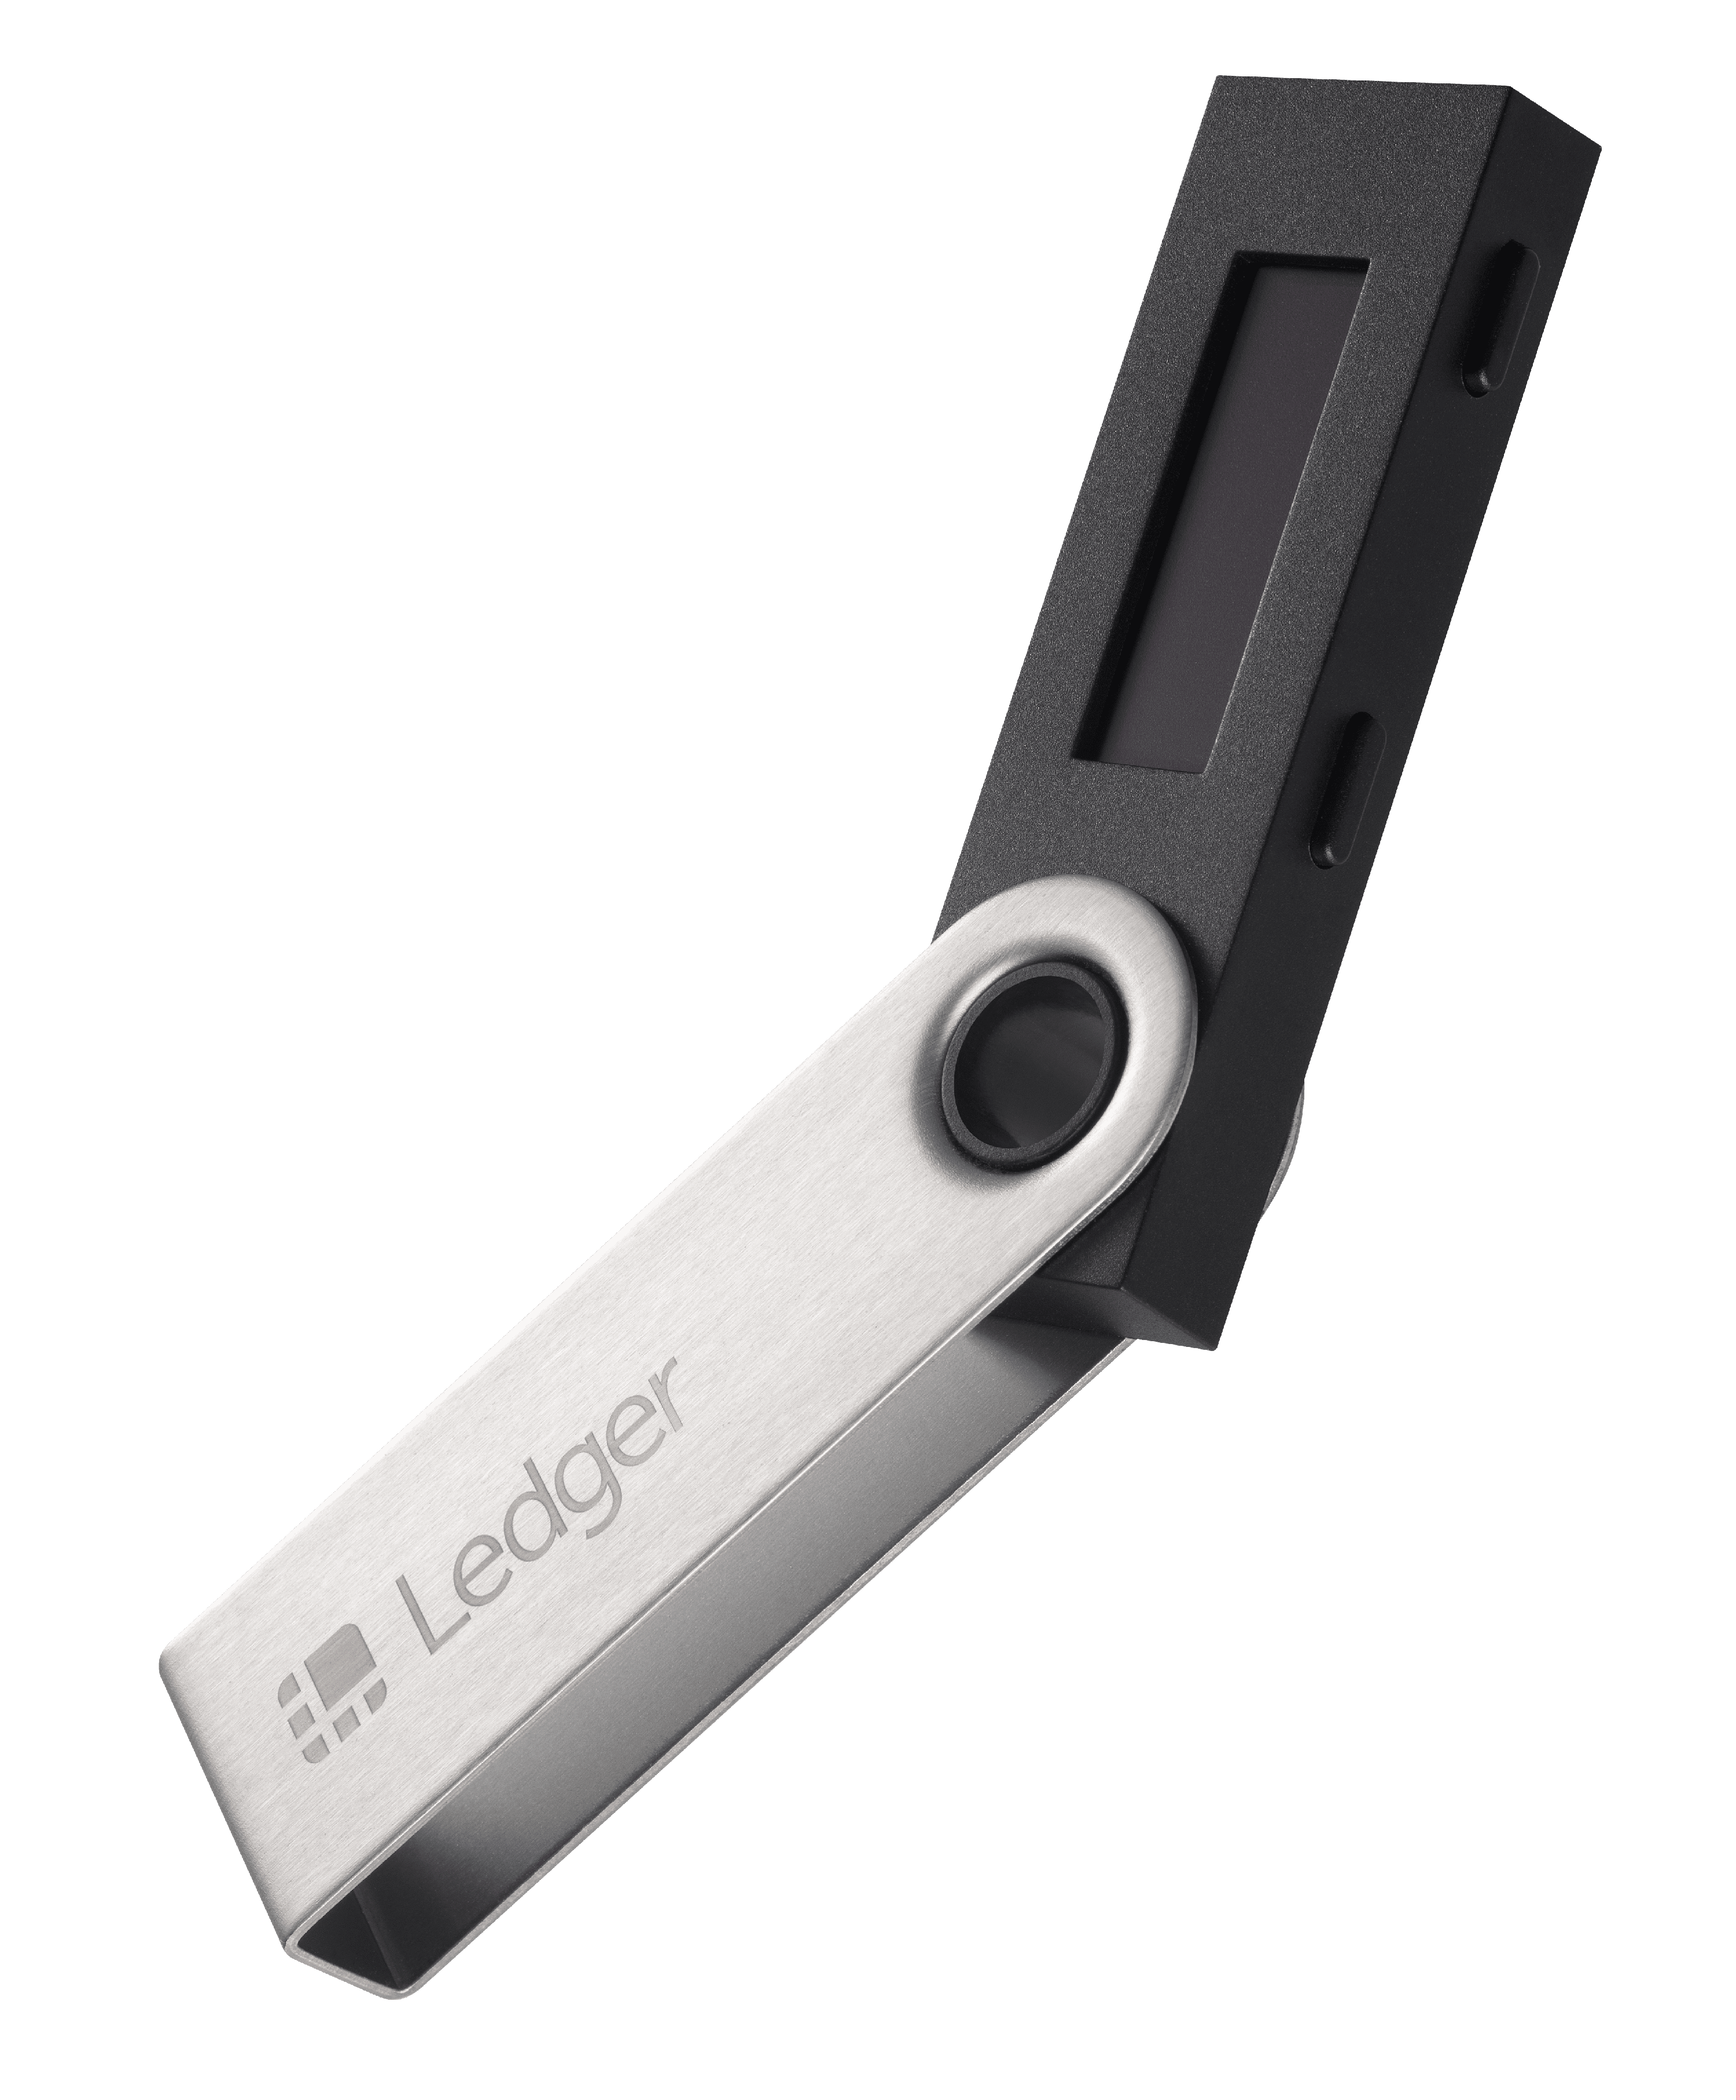 Mod de utilizare, configurare și actualizare a Ledger Nano X